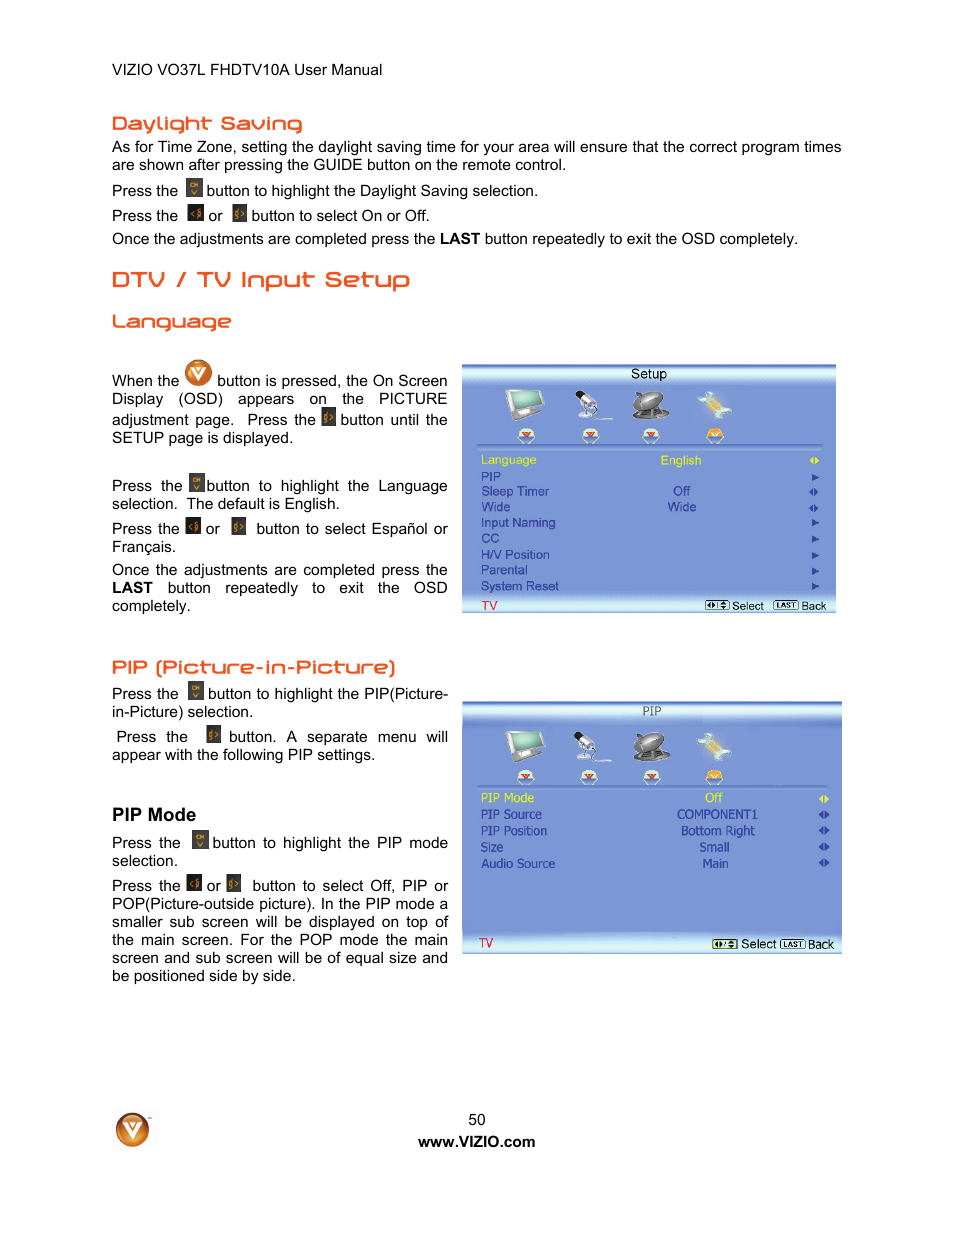 Dtv / tv input setup | Vizio VO37L FHDTV10A User Manual | Page 50 / 80